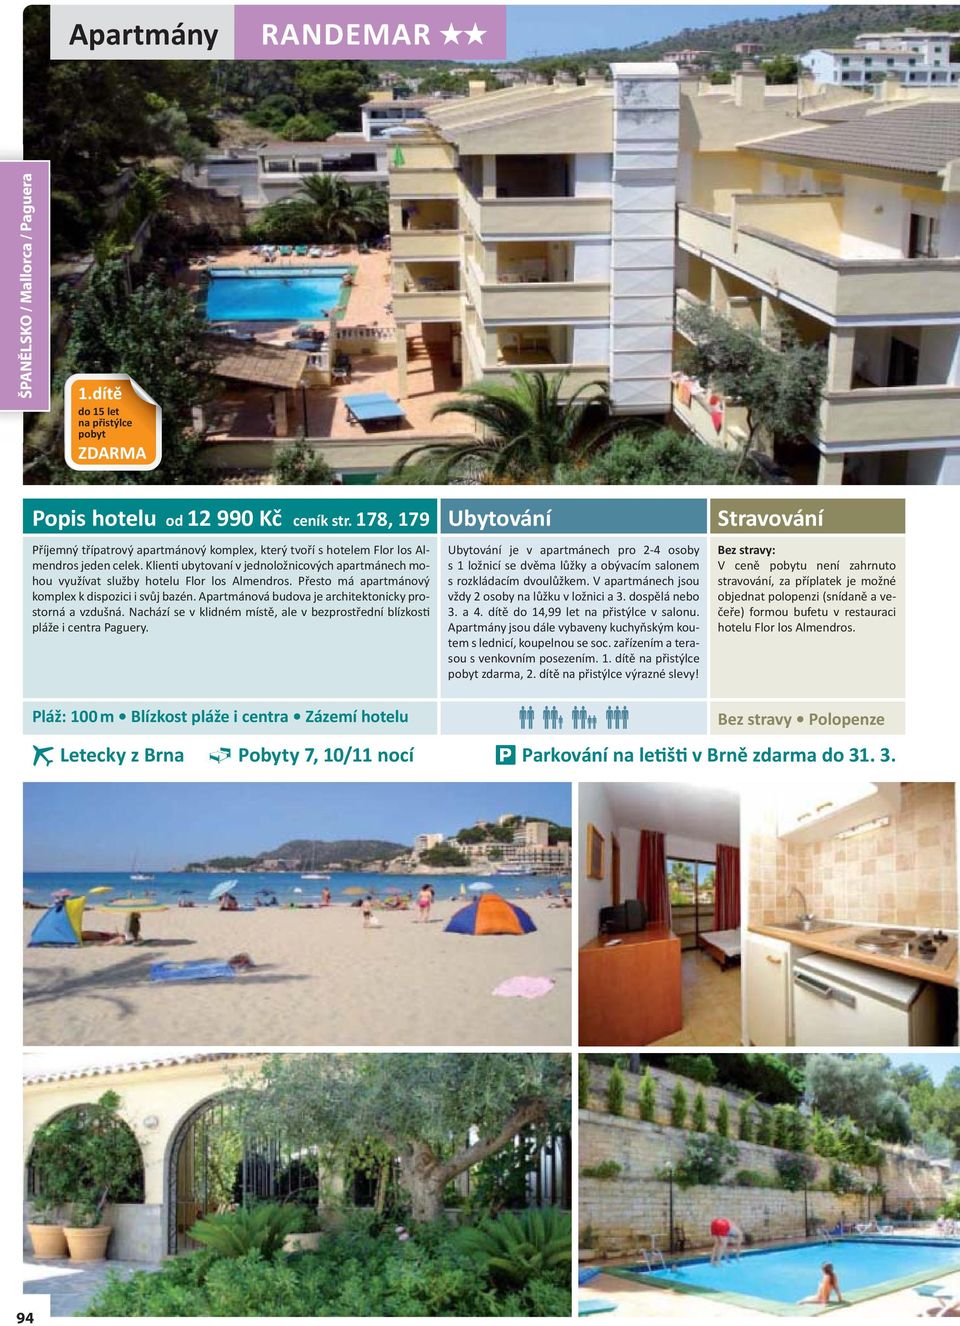 Klienti ubytovaní v jednoložnicových apartmánech mohou využívat služby hotelu Flor los Almendros. Přesto má apartmánový komplex k dispozici i svůj bazén.